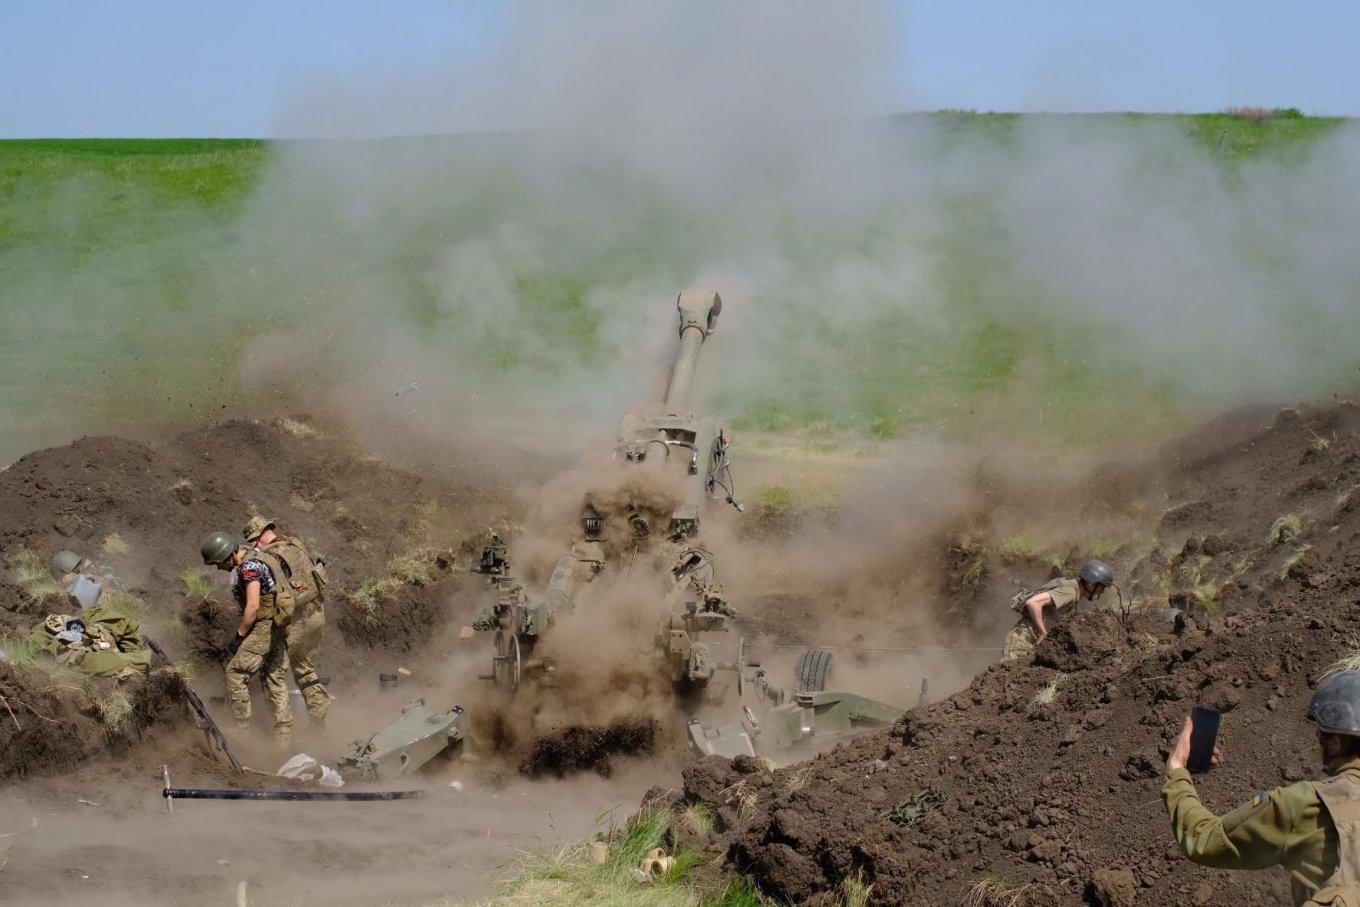 American M777 howitzer in action in Ukraine, Defense Express